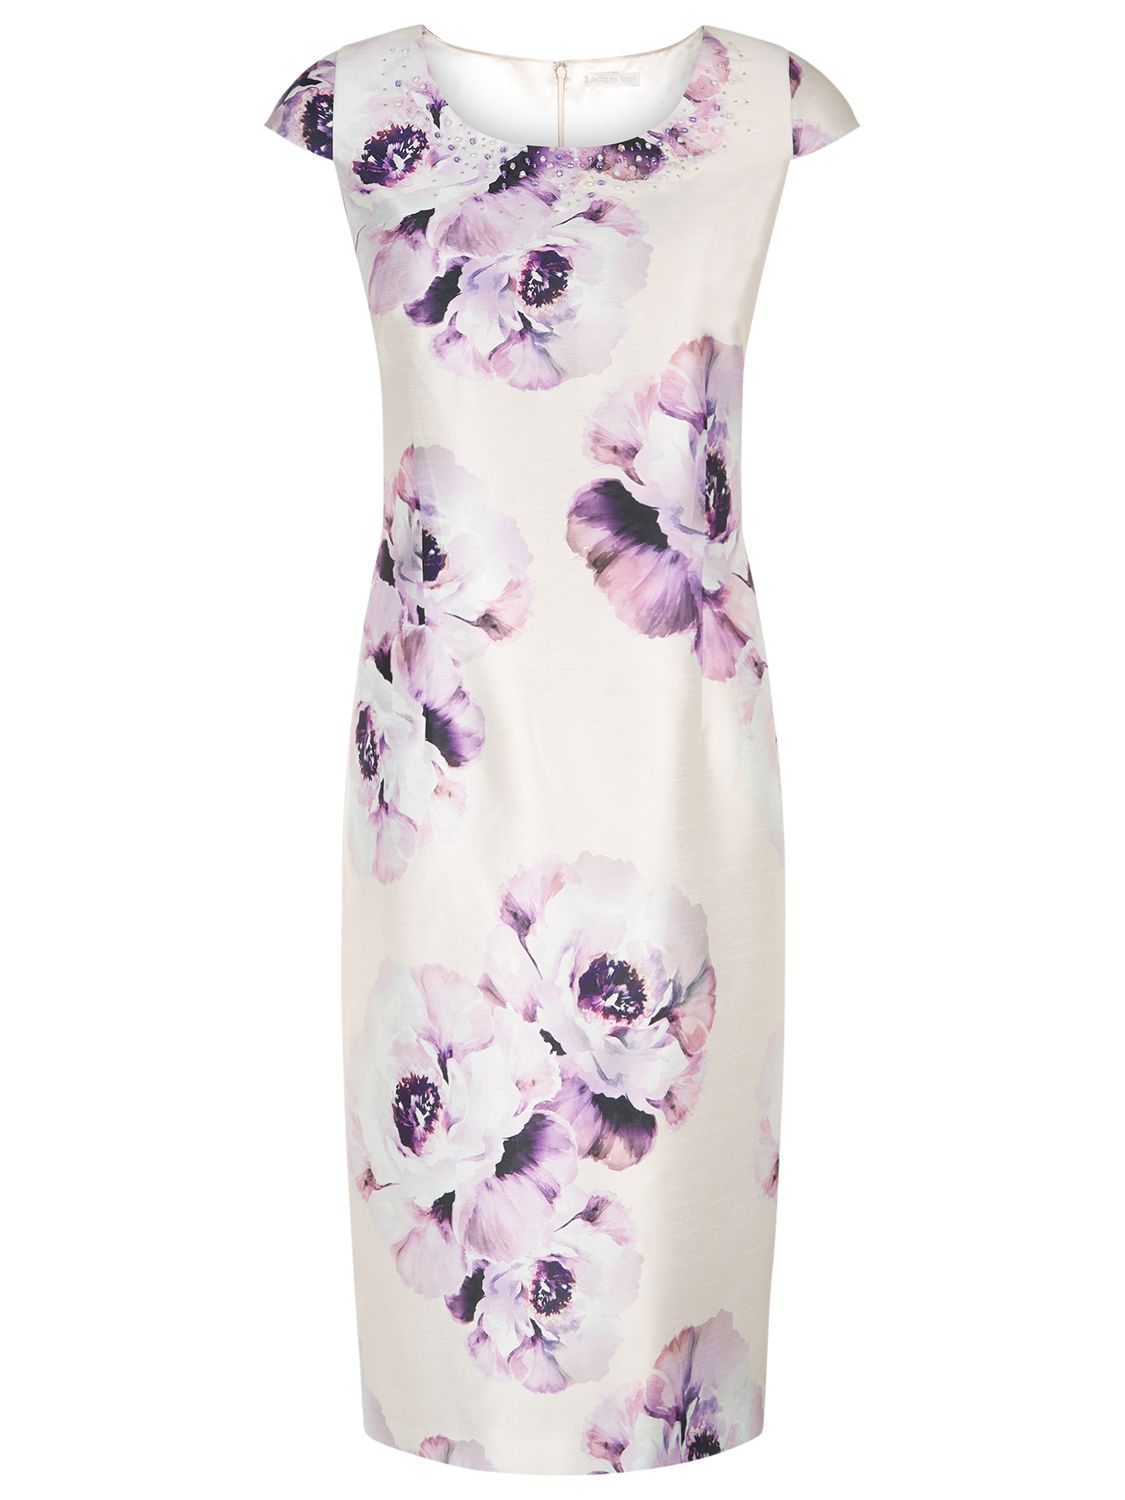 Jacques Vert Print Embellished Dress, Light Pink at John Lewis & Partners